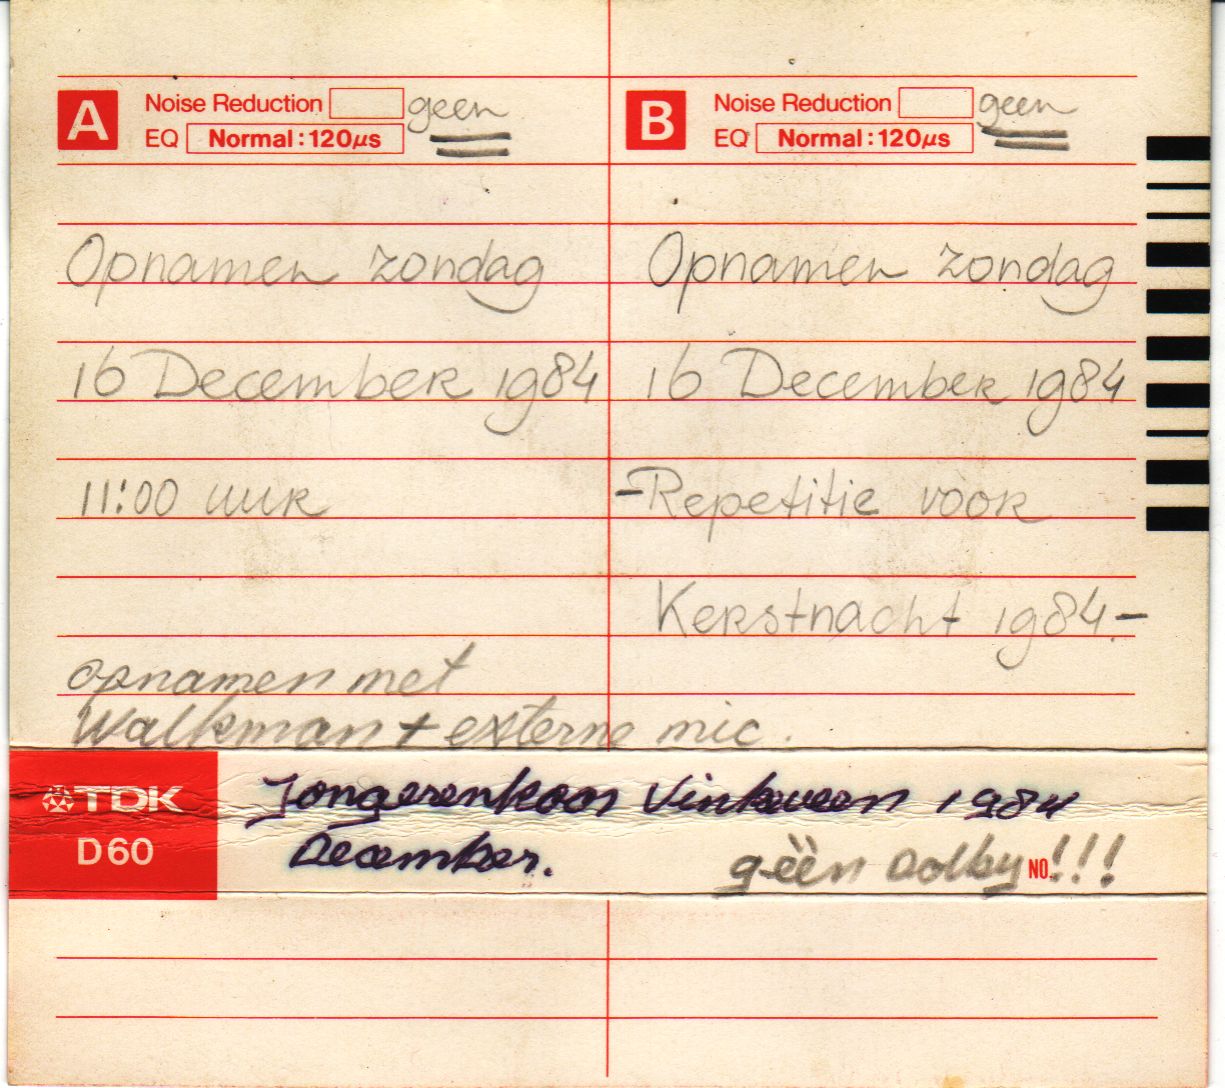 [JK16december1984-zondagsmis+repetitie.jpg]